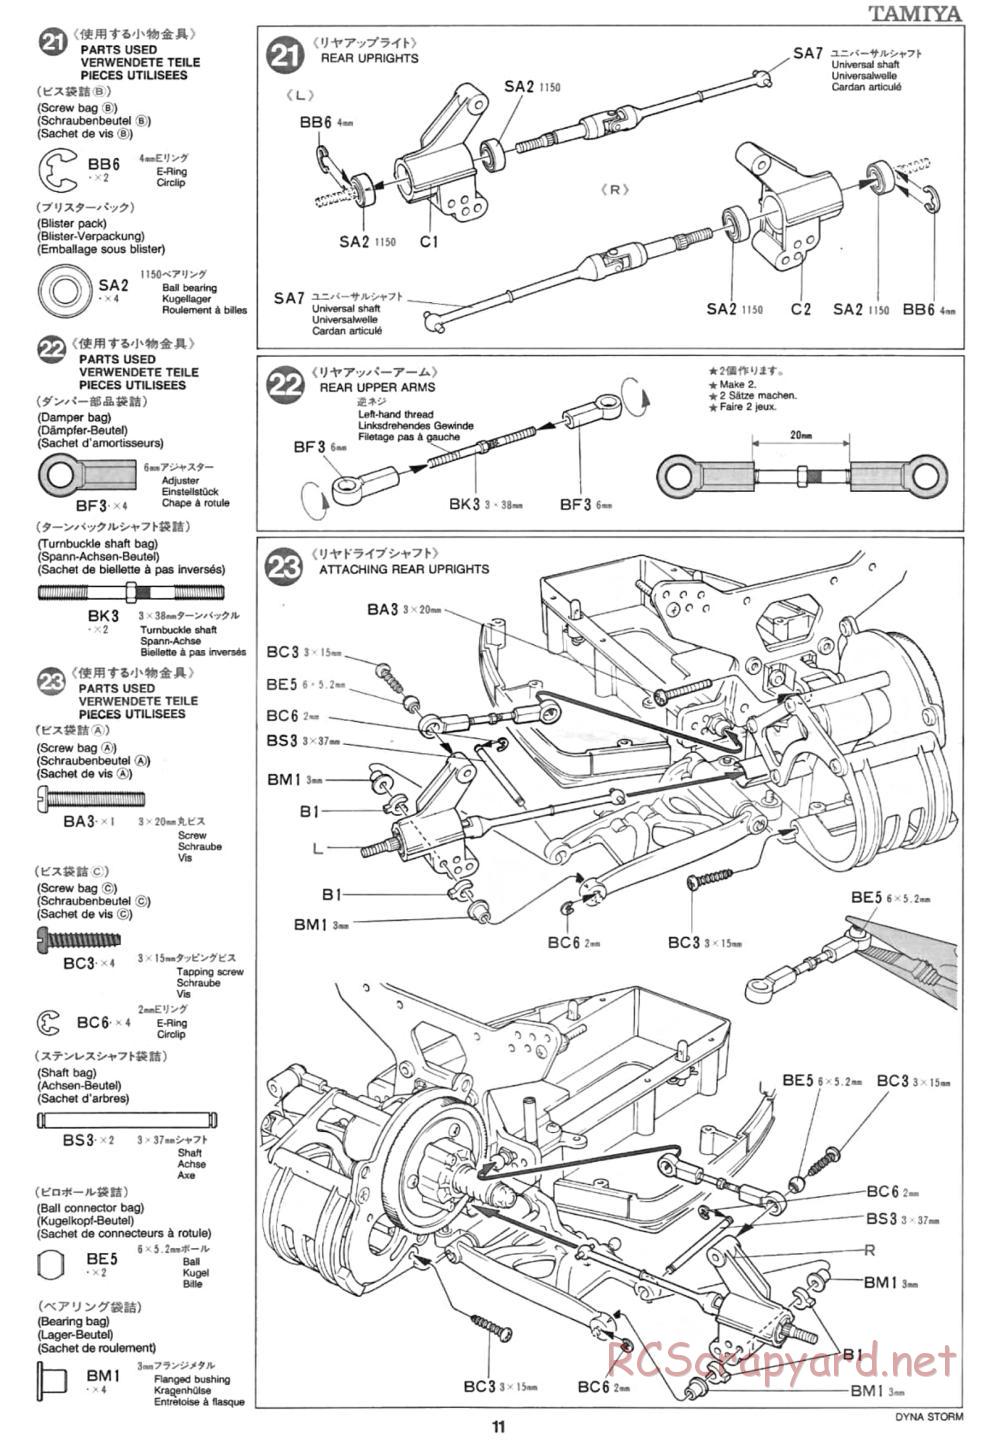 Tamiya - Dyna Storm Chassis - Manual - Page 11